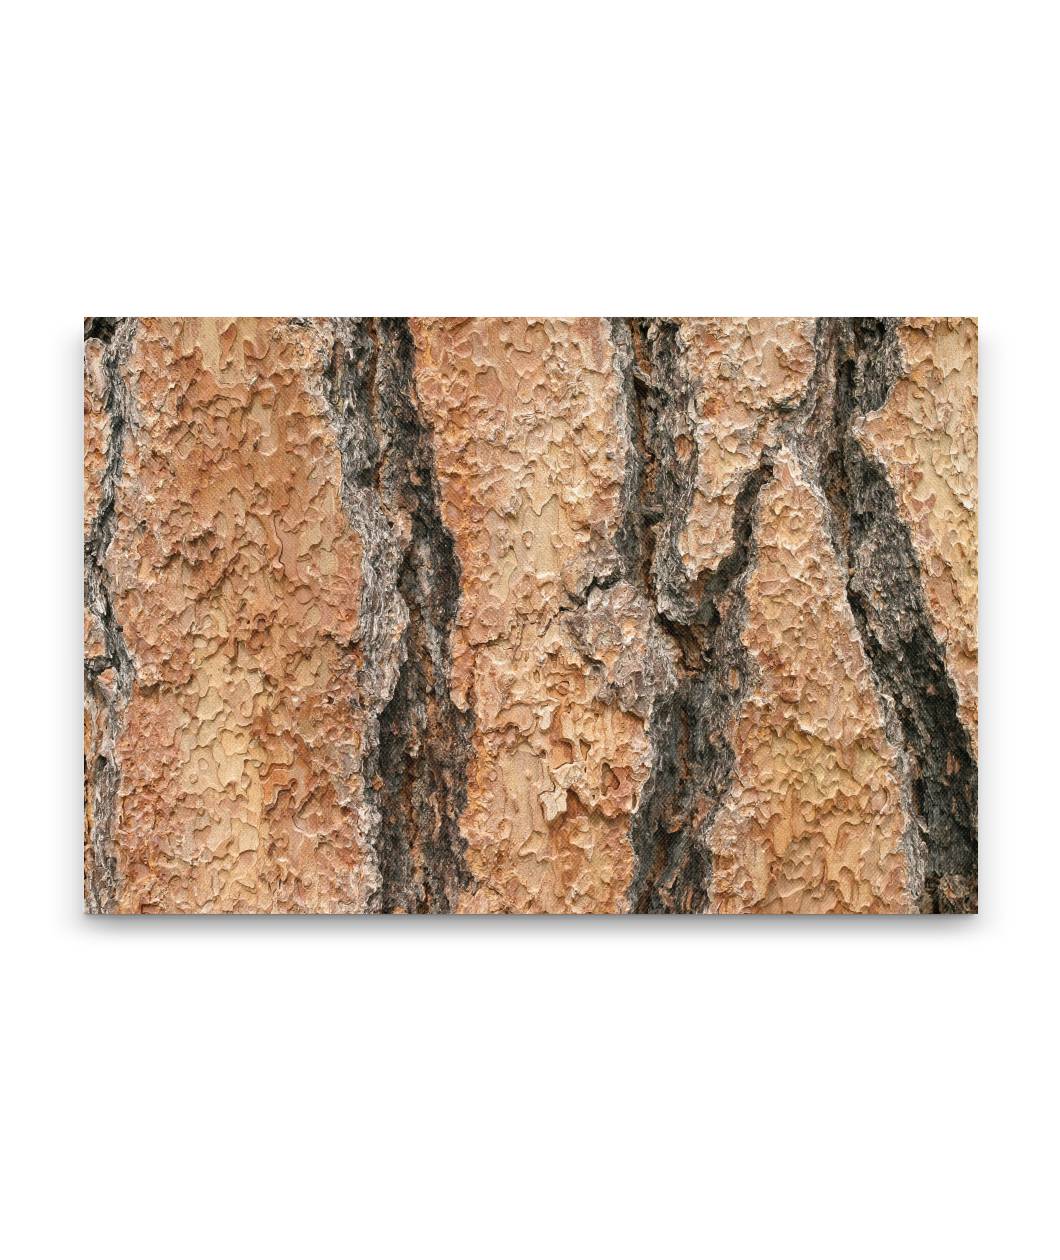 Ponderosa Pine Bark Closeup, LaPine State Park, Oregon